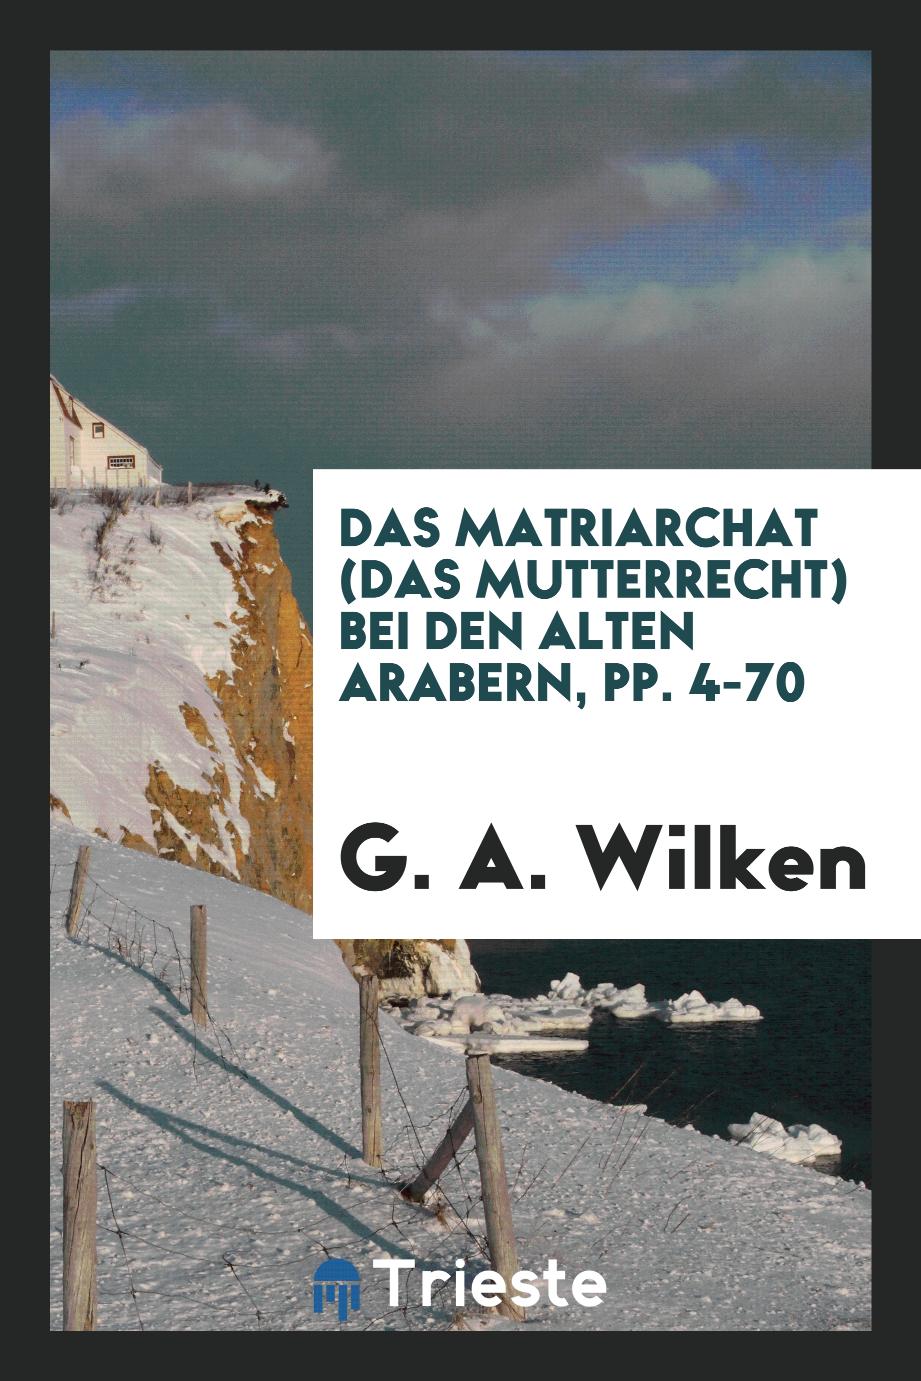 G. A. Wilken - Das Matriarchat (Das Mutterrecht) bei den Alten Arabern, pp. 4-70